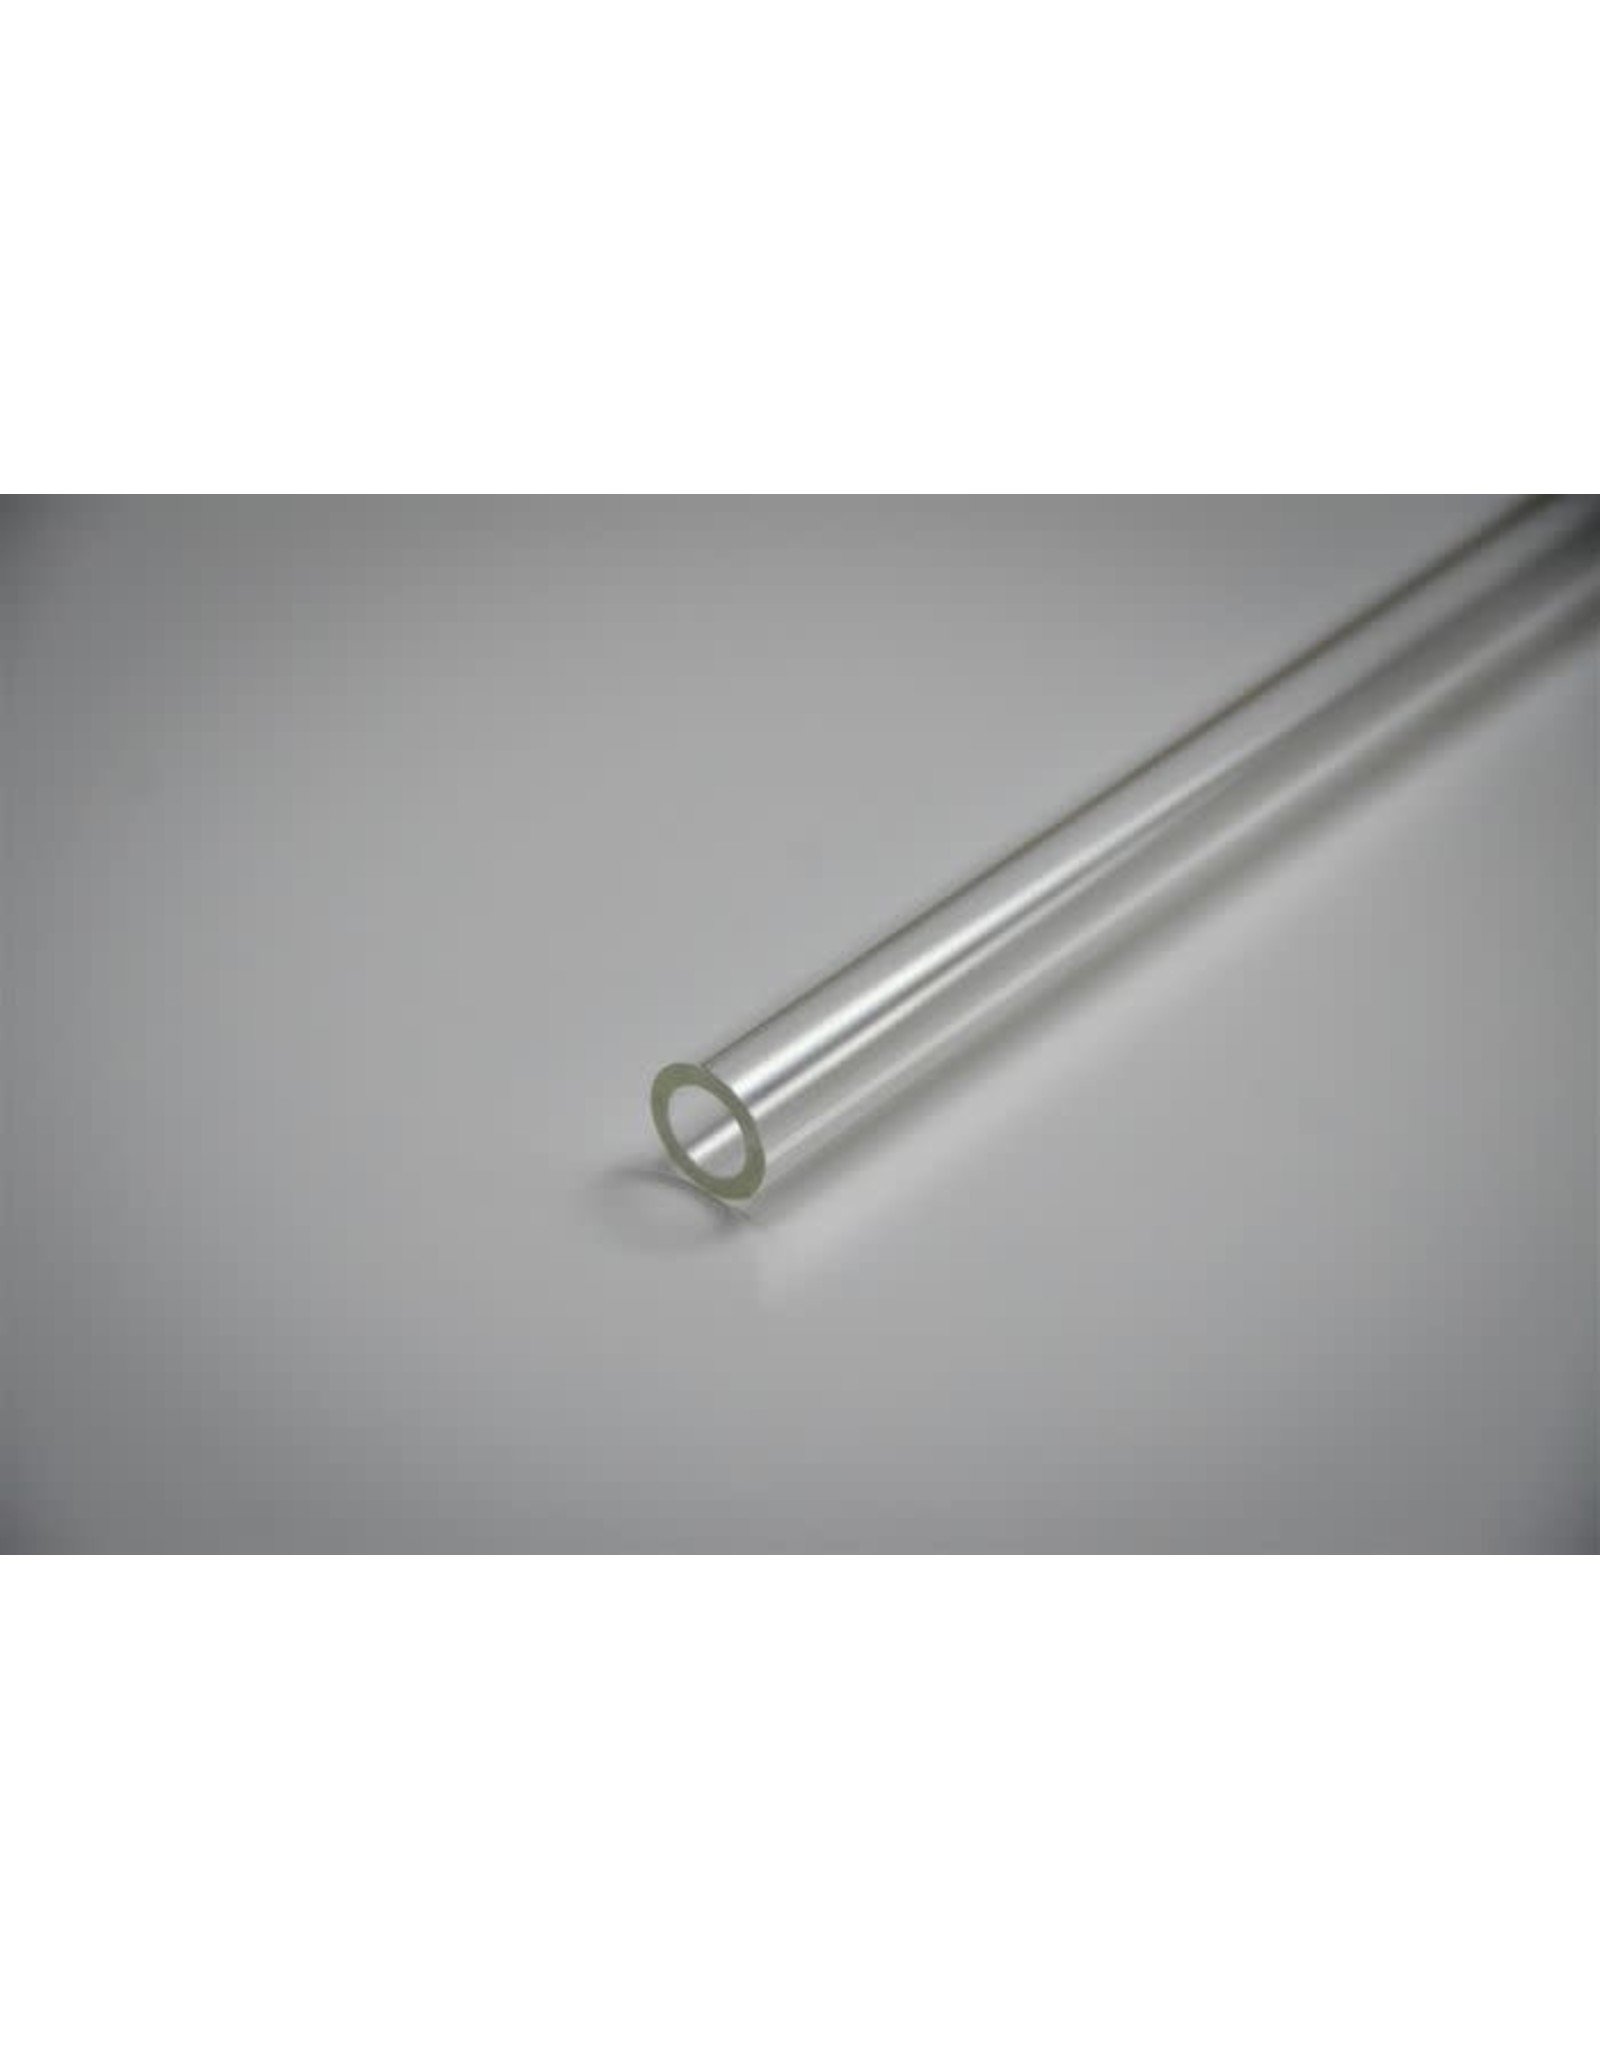 Blichmann Level Gauge Glass Tube G1 10gal